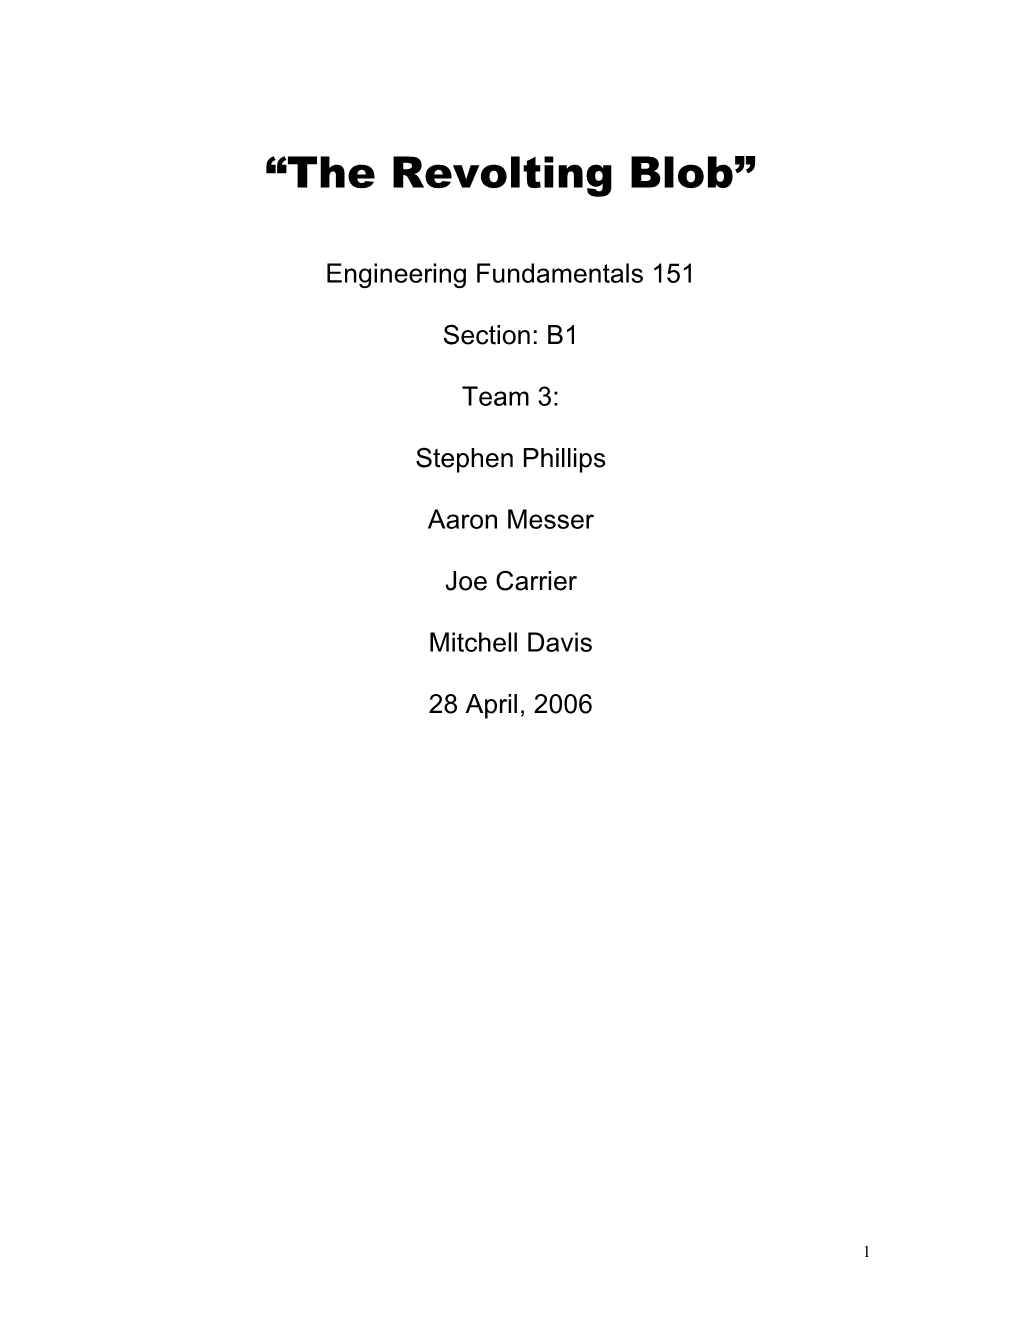 The Revolting Blob